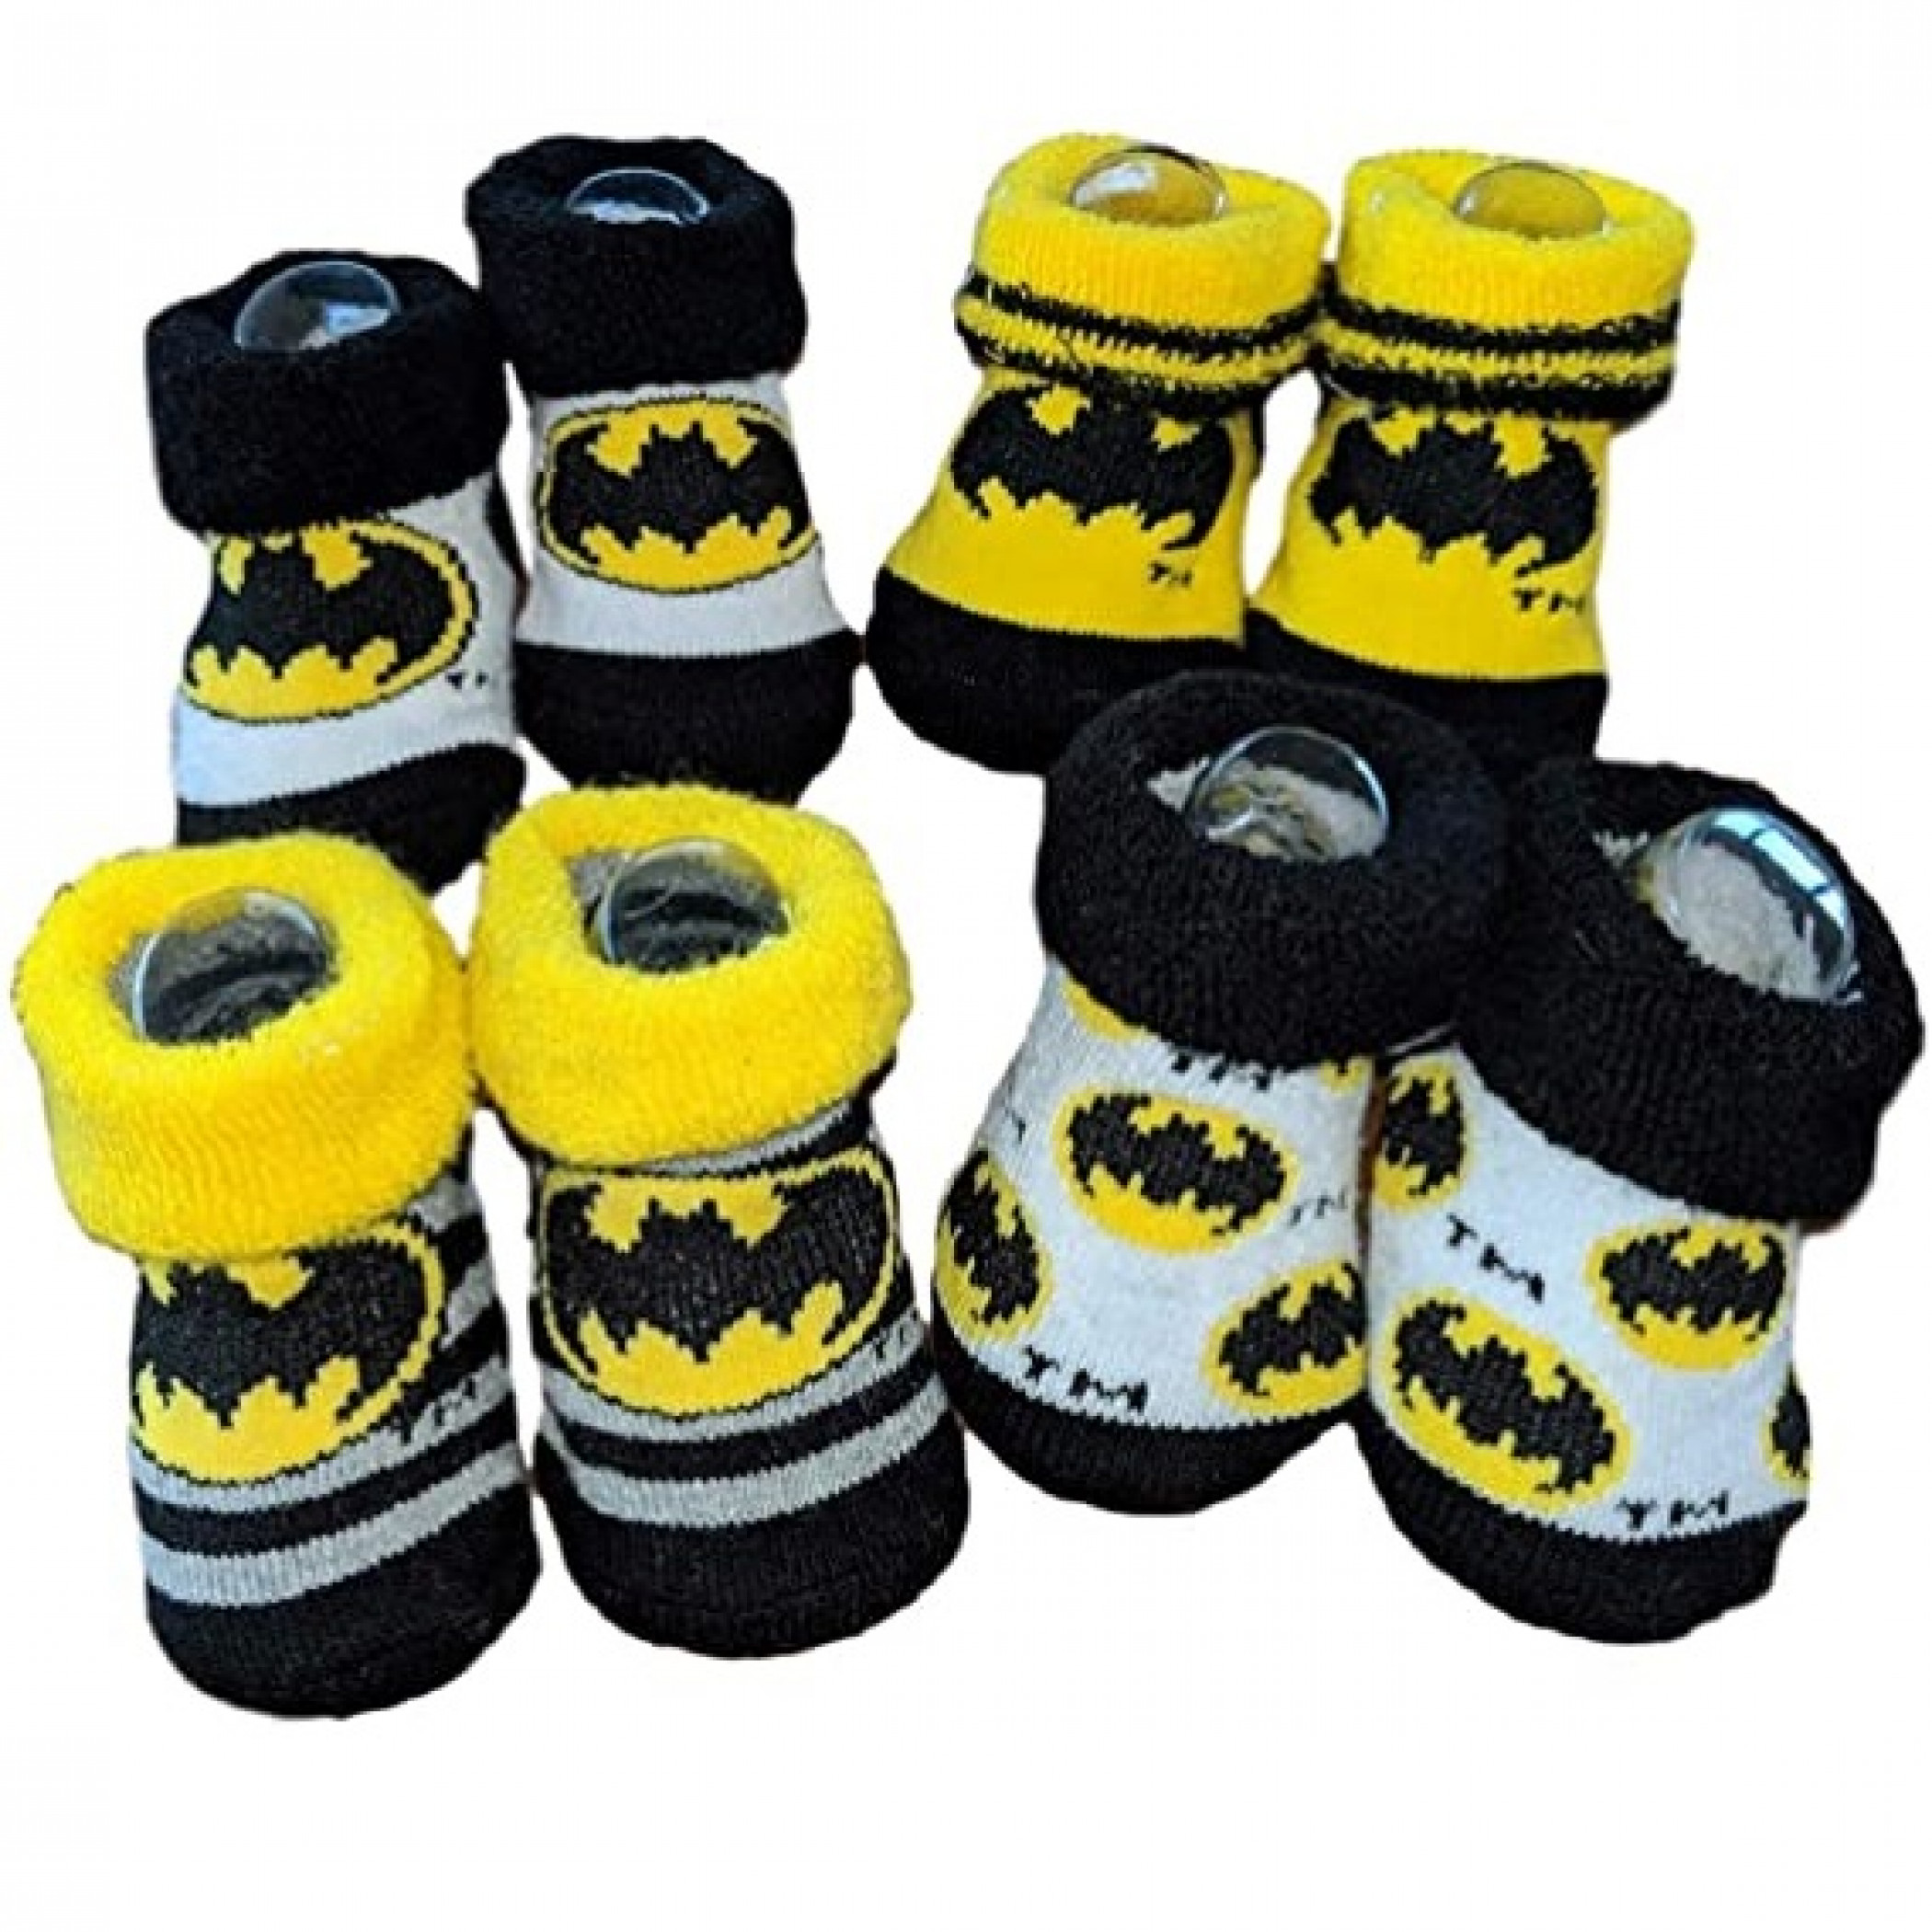 Batman Patterned Baby Bootie 4-Pack Set